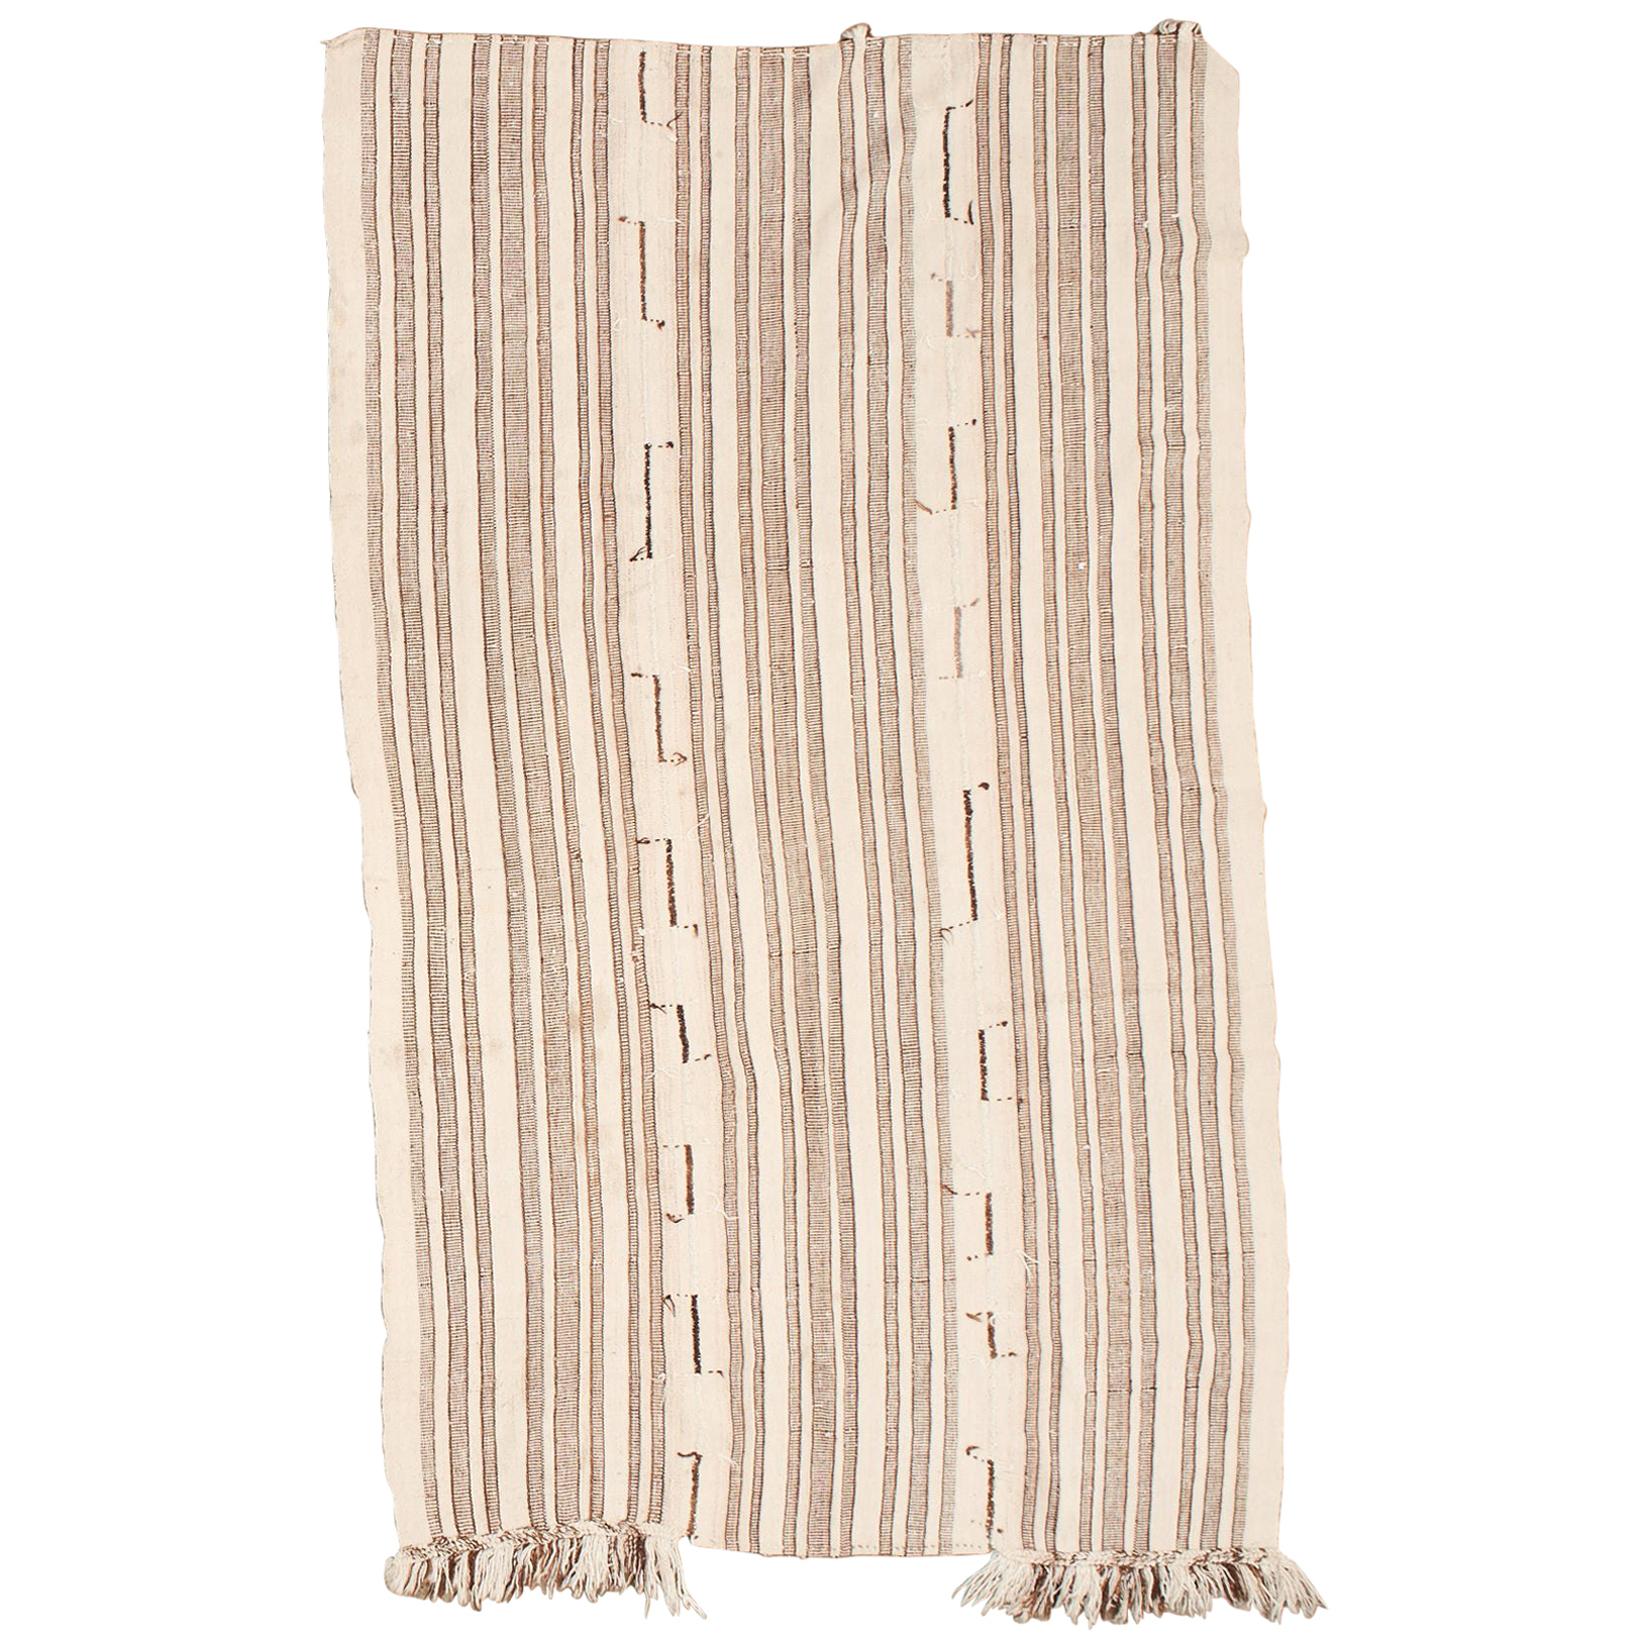 Turkish Striped Plain Weave Blanket